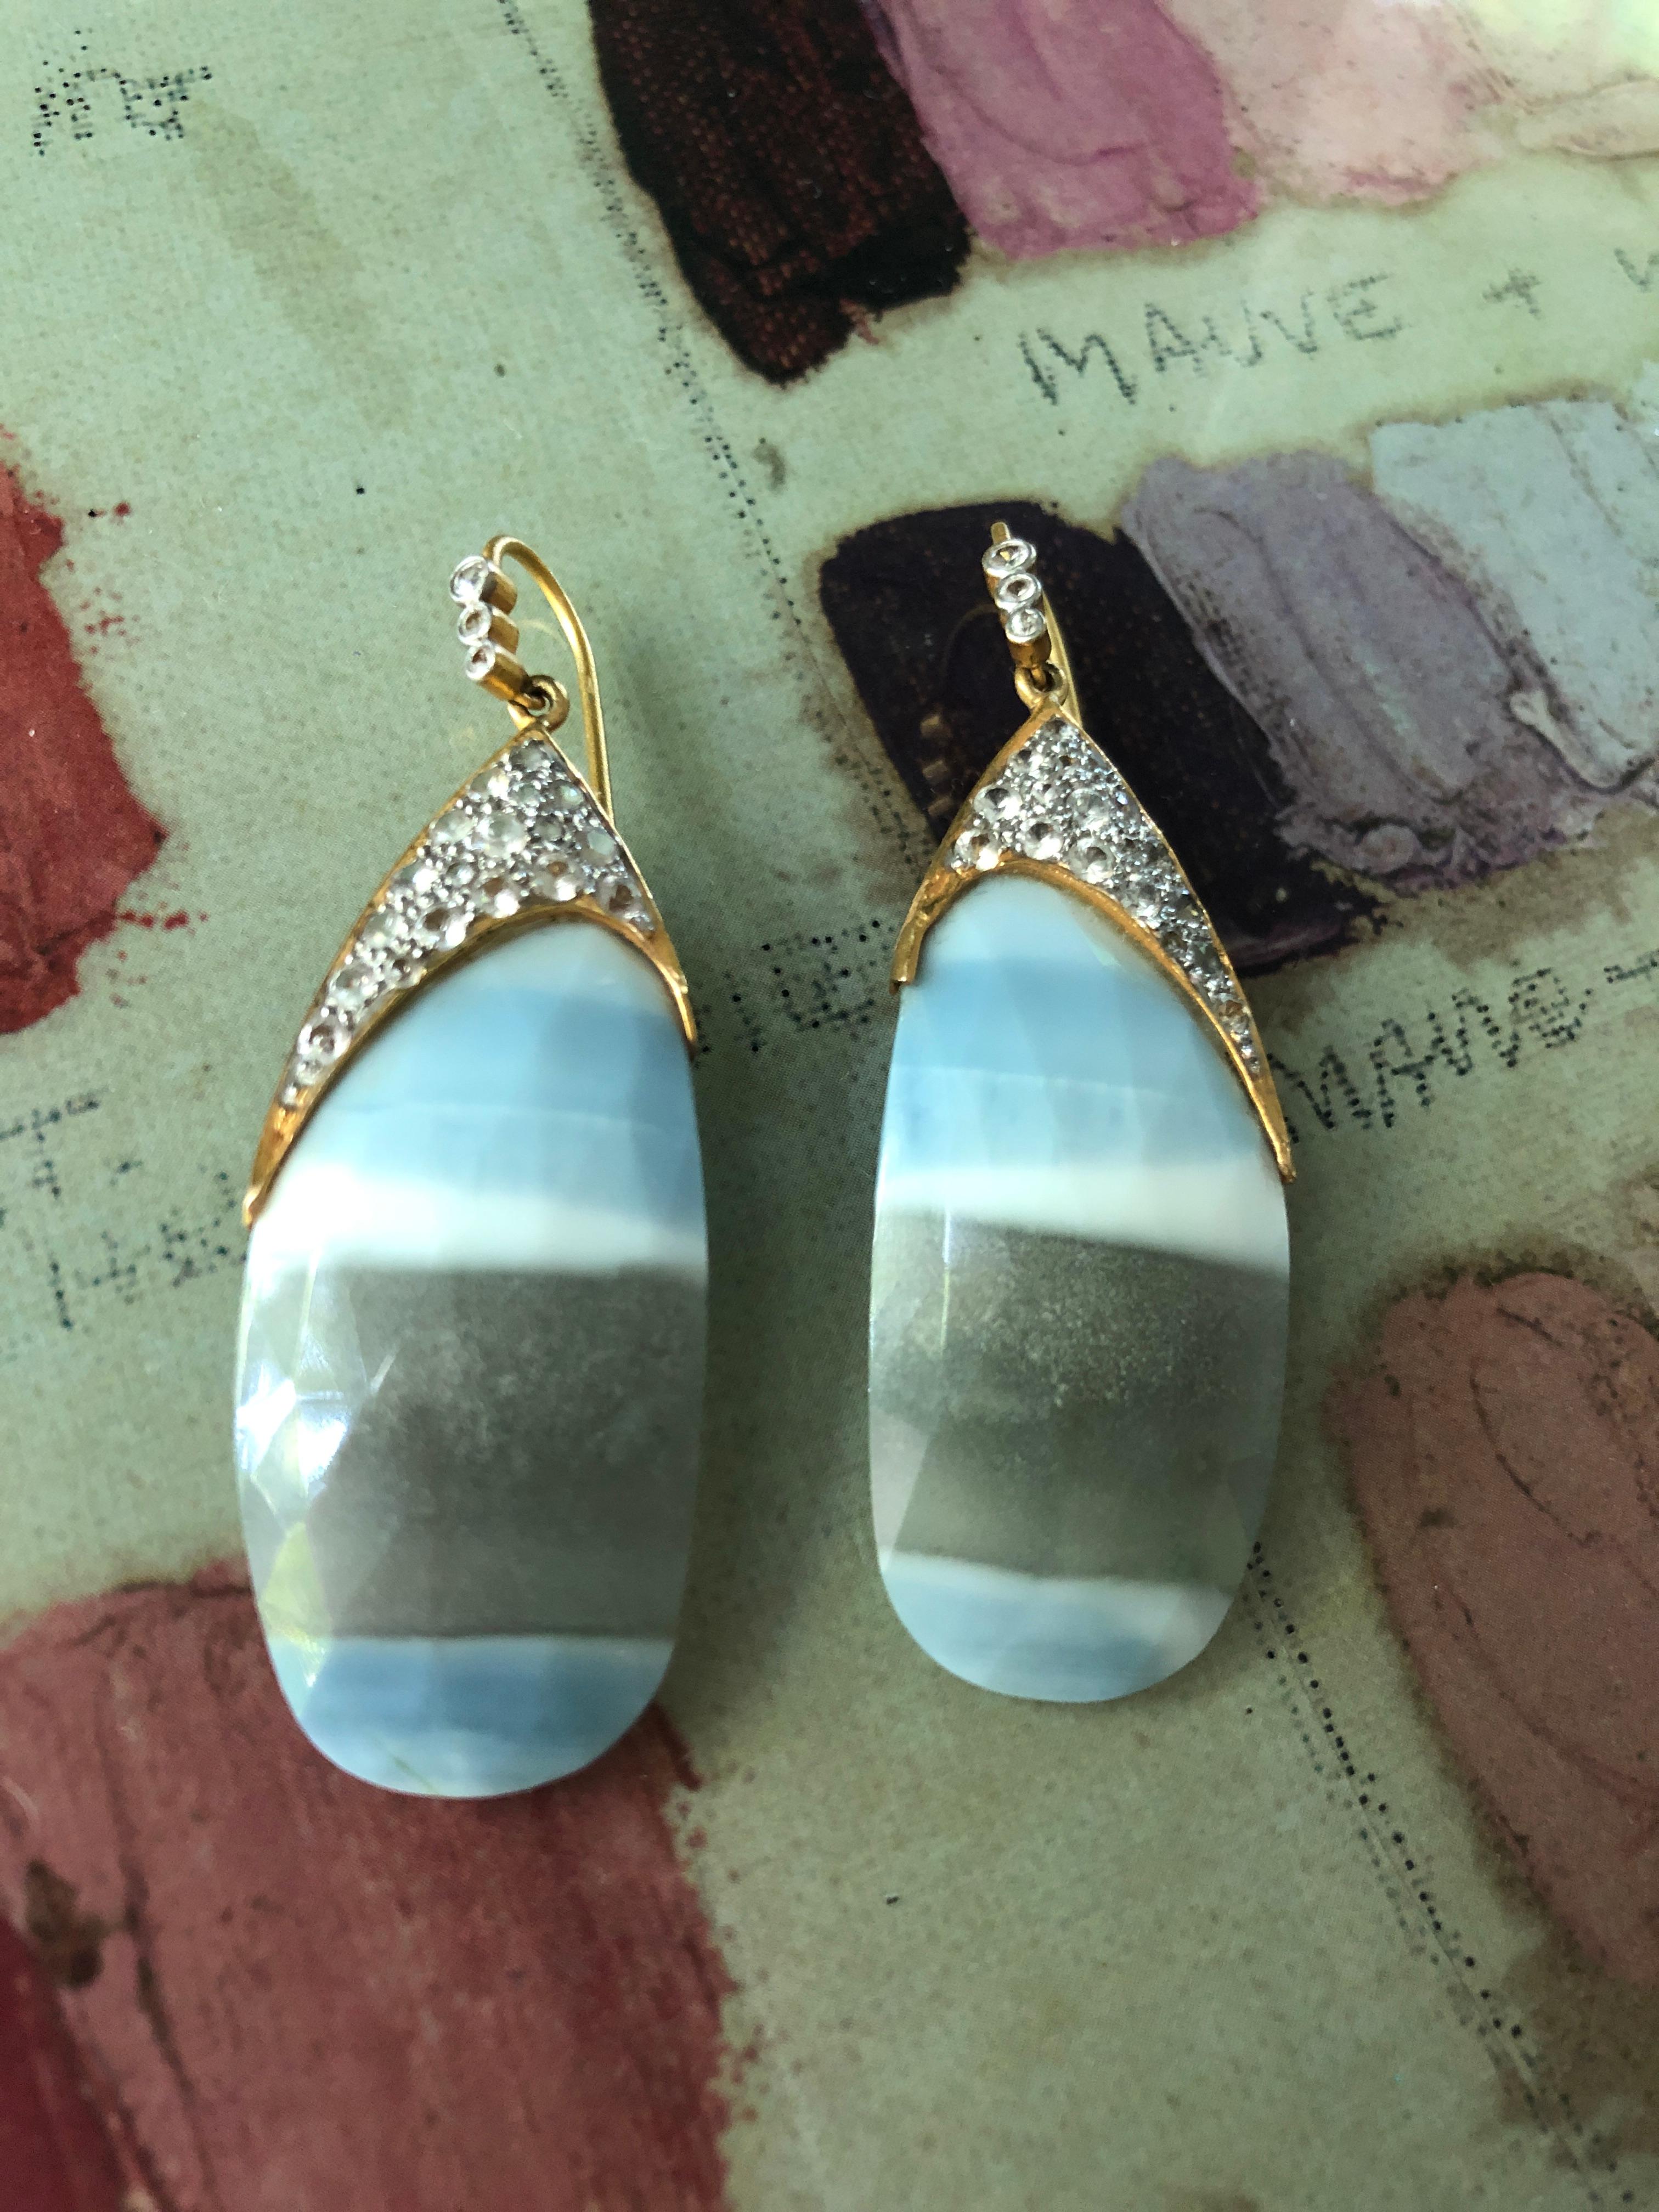 sapphire and opal earrings